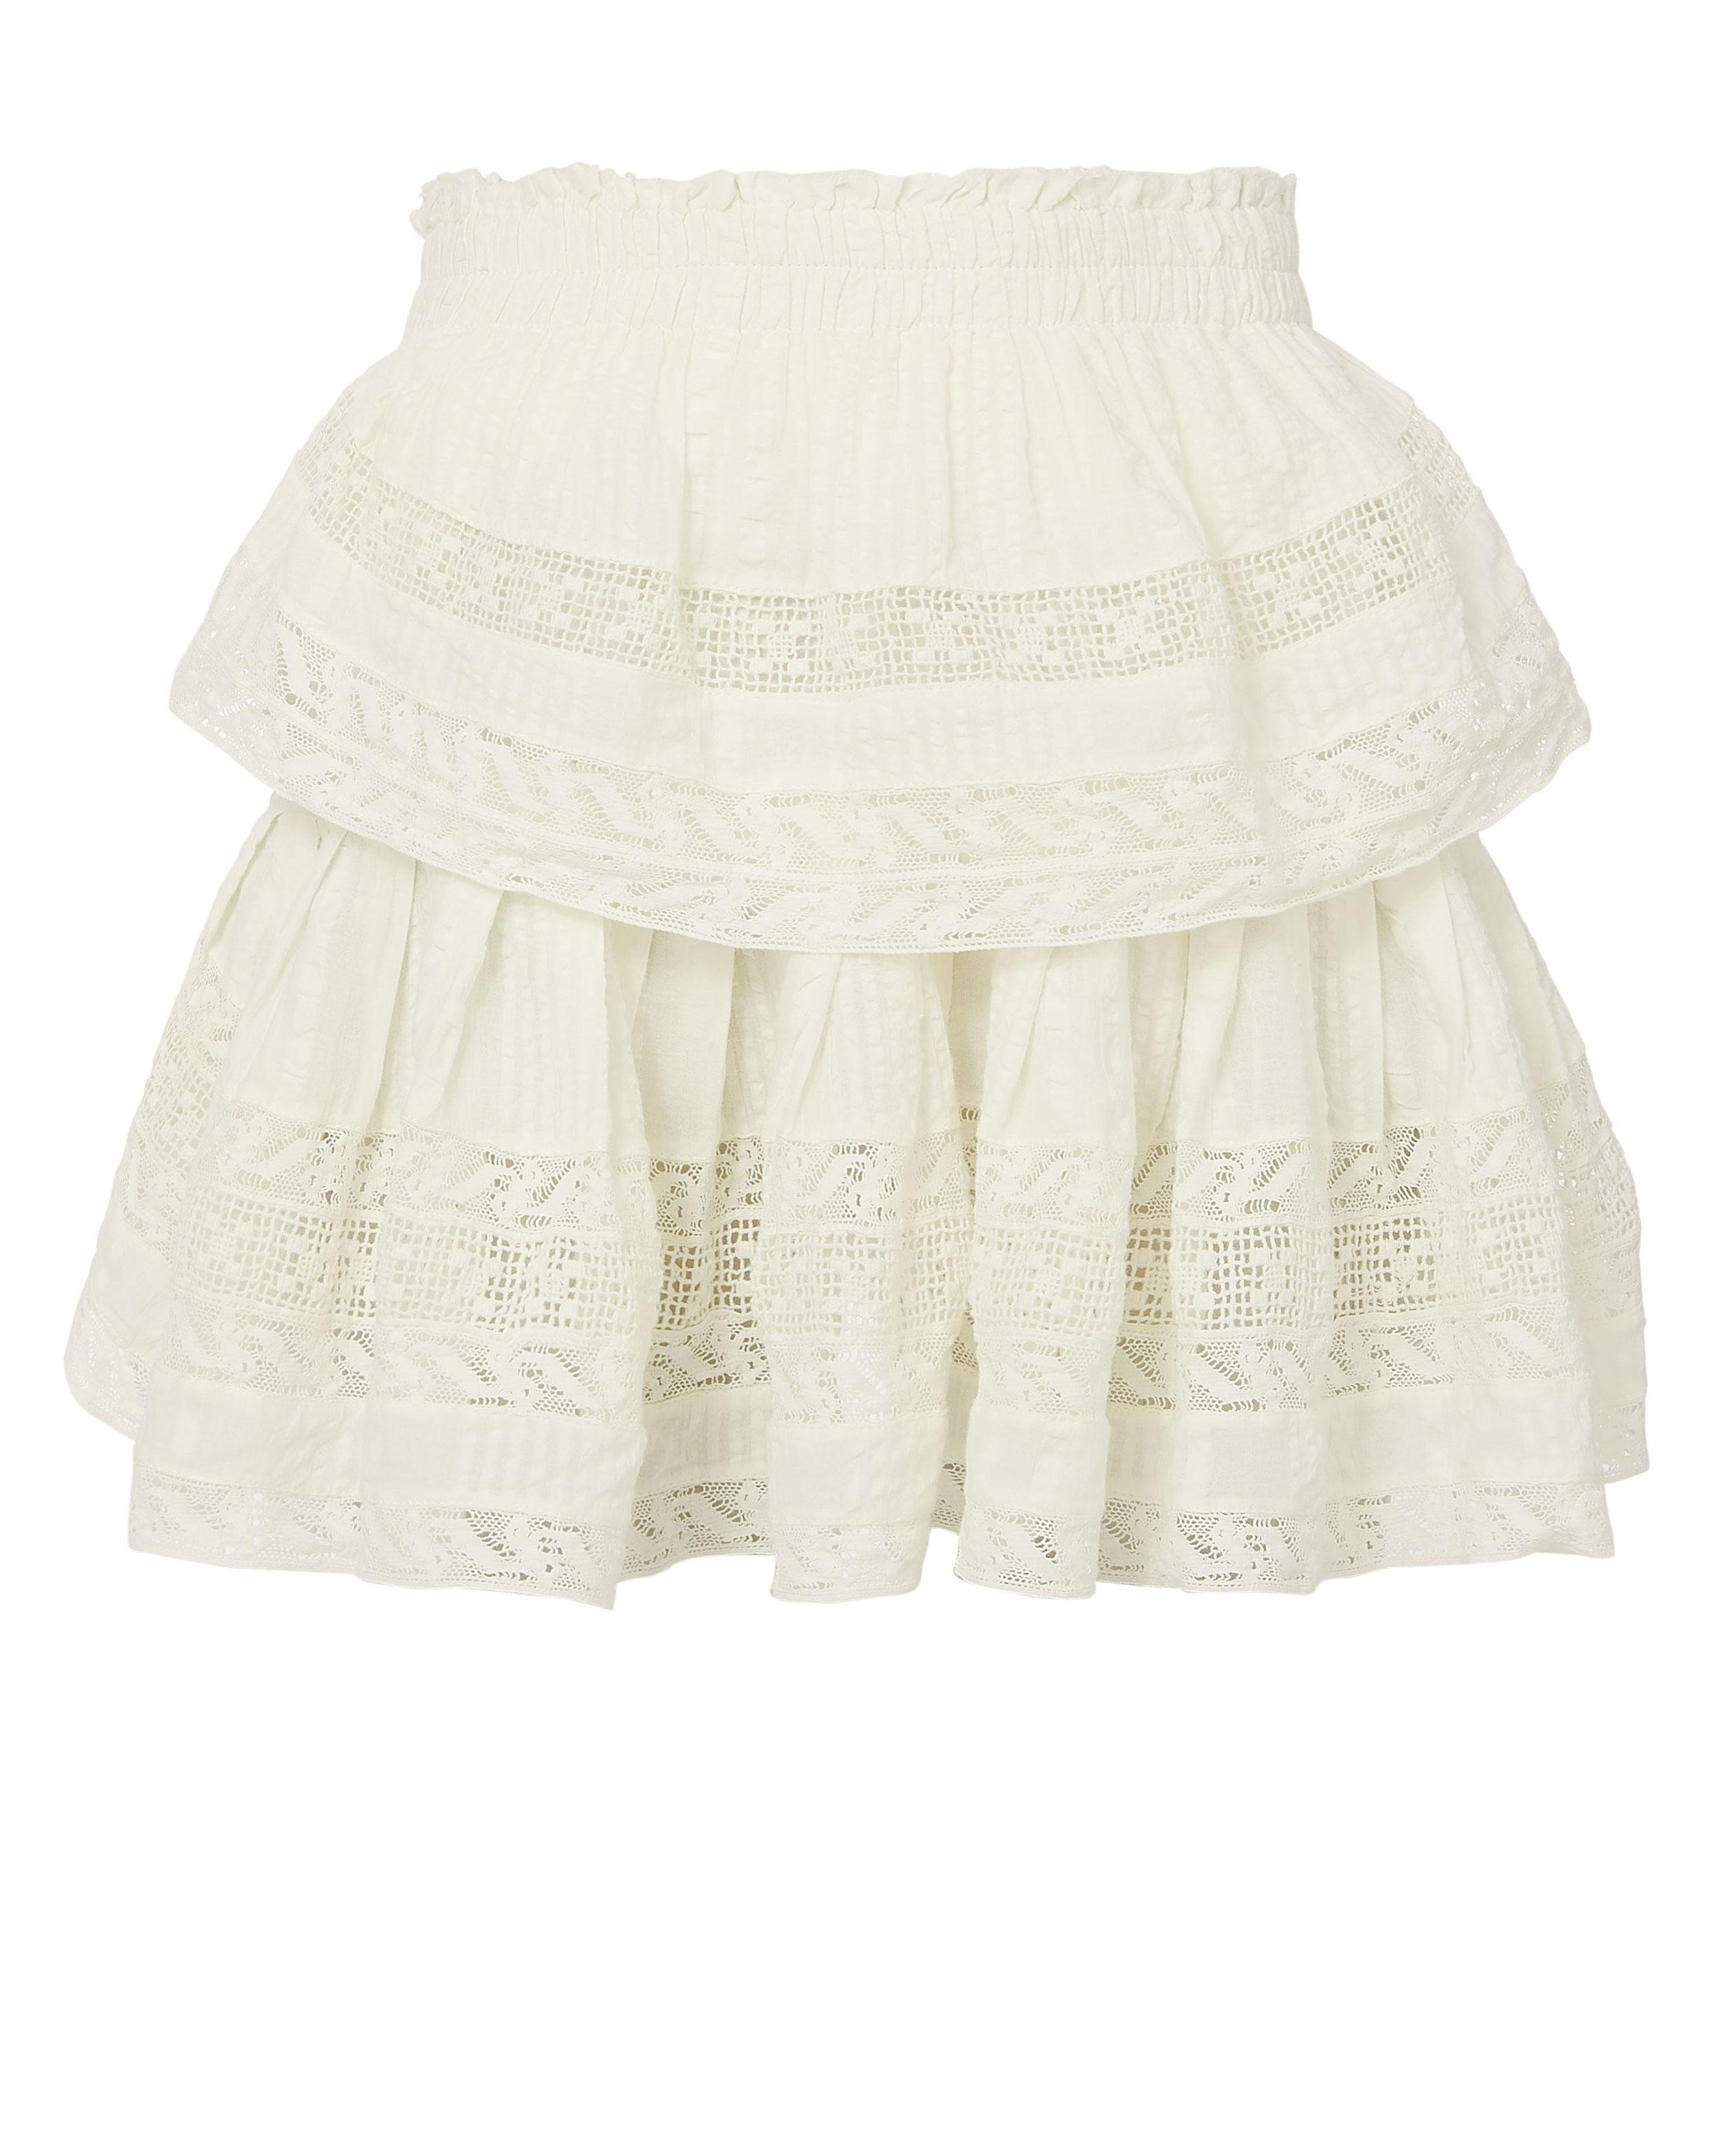 LoveShackFancy Ruffle Mini Skirt in White - Lyst